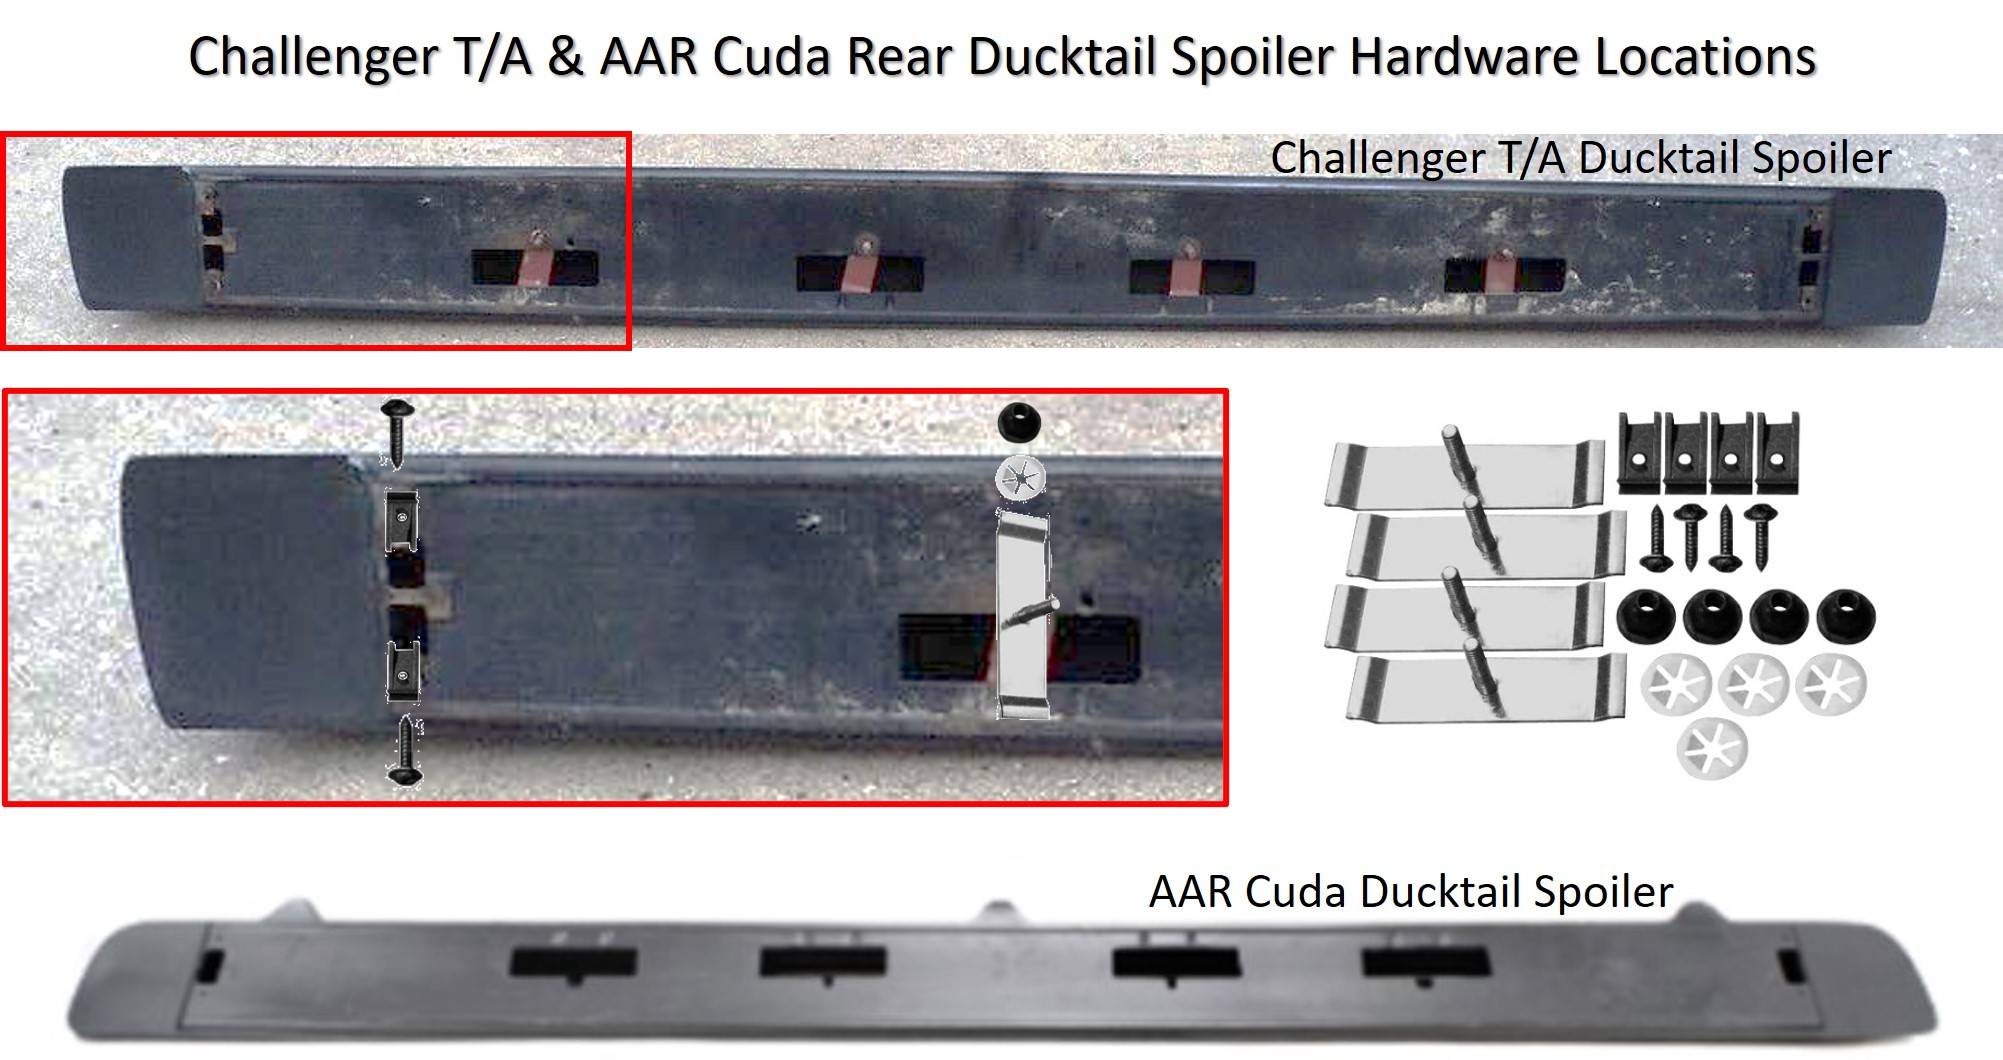 Challenger TA & AAR Cuda Ducktail Spoiler Hardware Locations.jpg